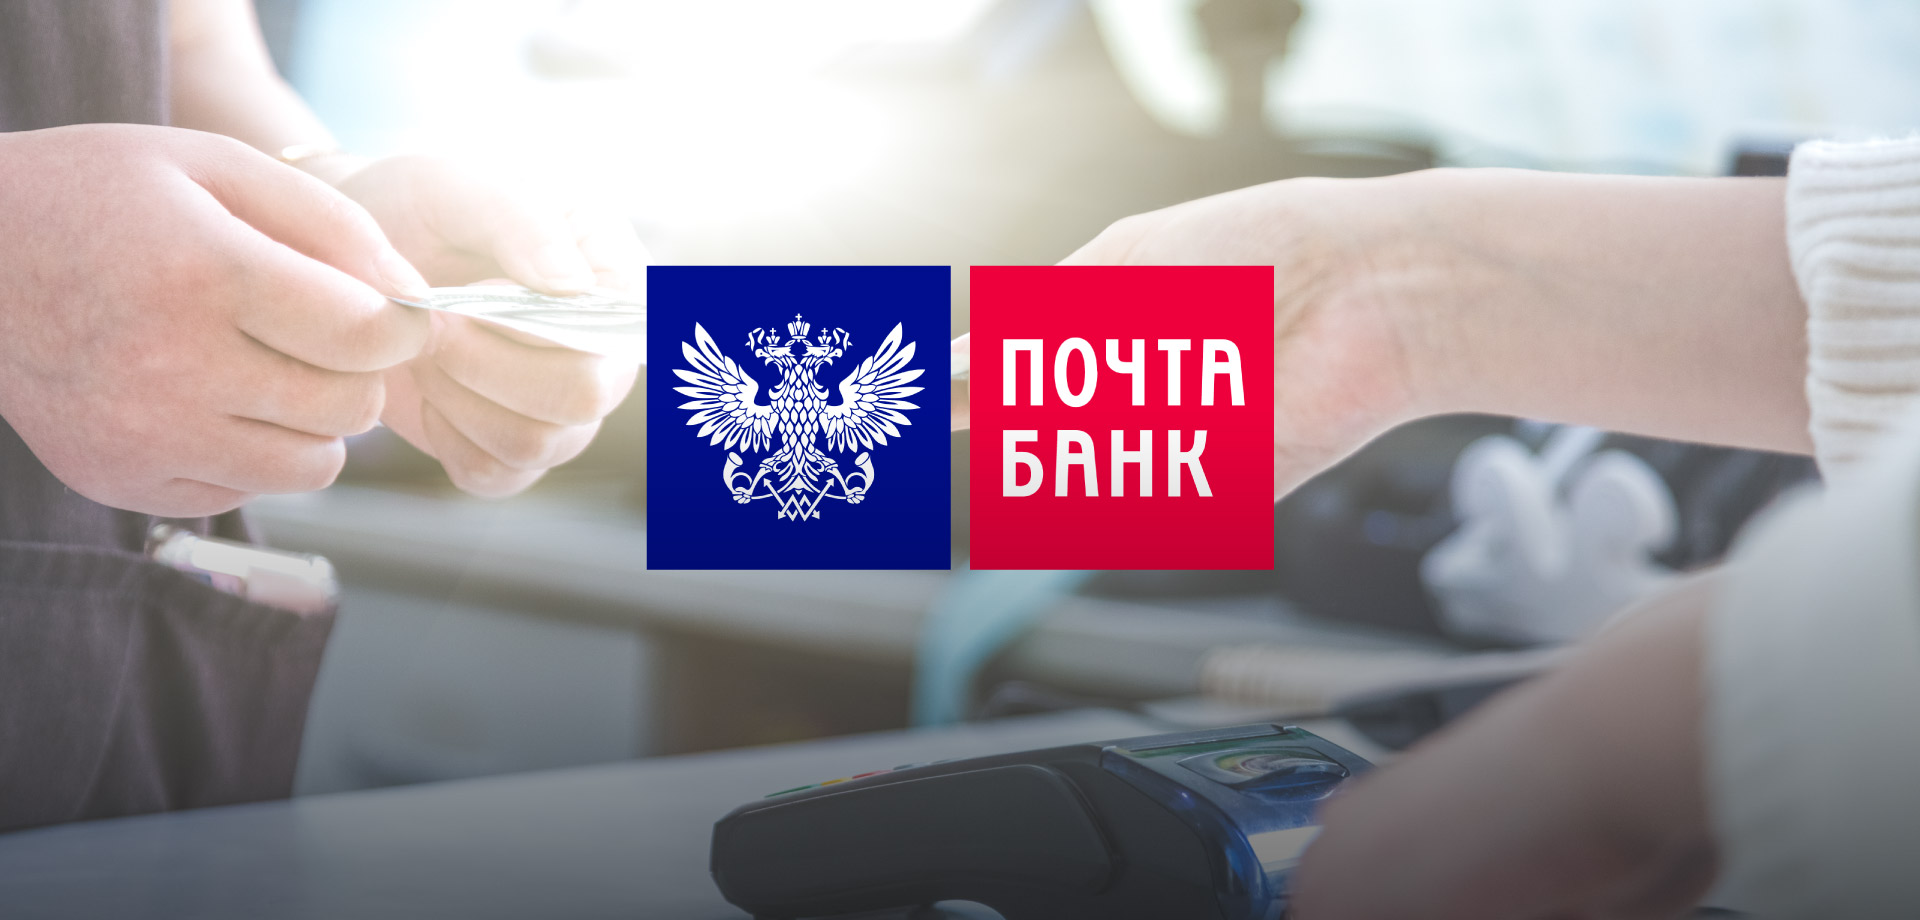 Pochta Bank Case